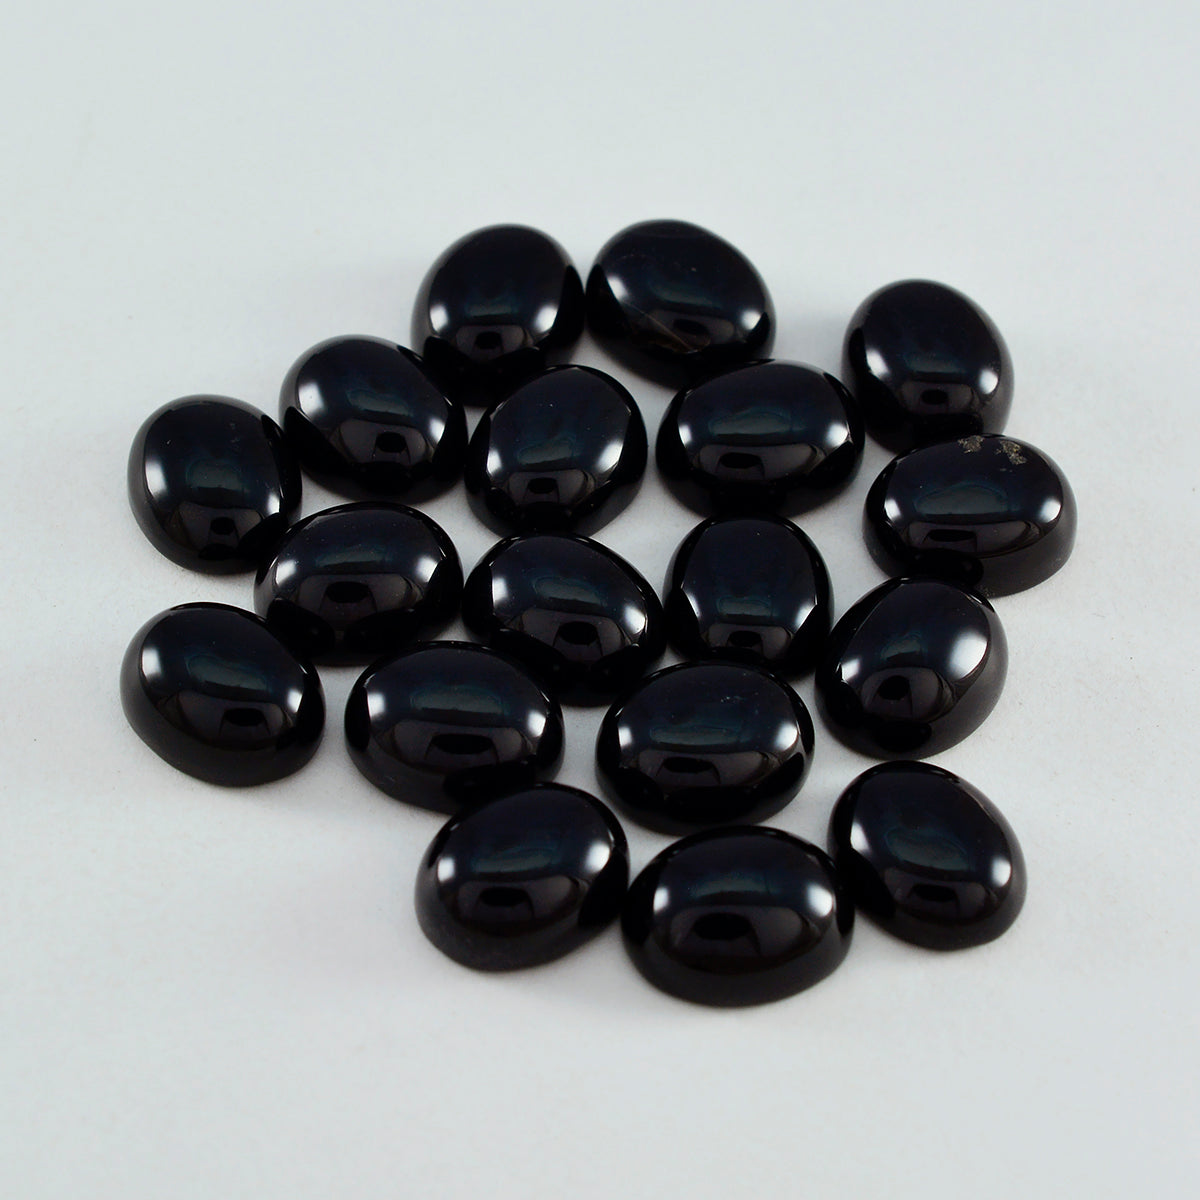 Riyogems 1PC Black Onyx Cabochon 5x7 mm Oval Shape nice-looking Quality Stone